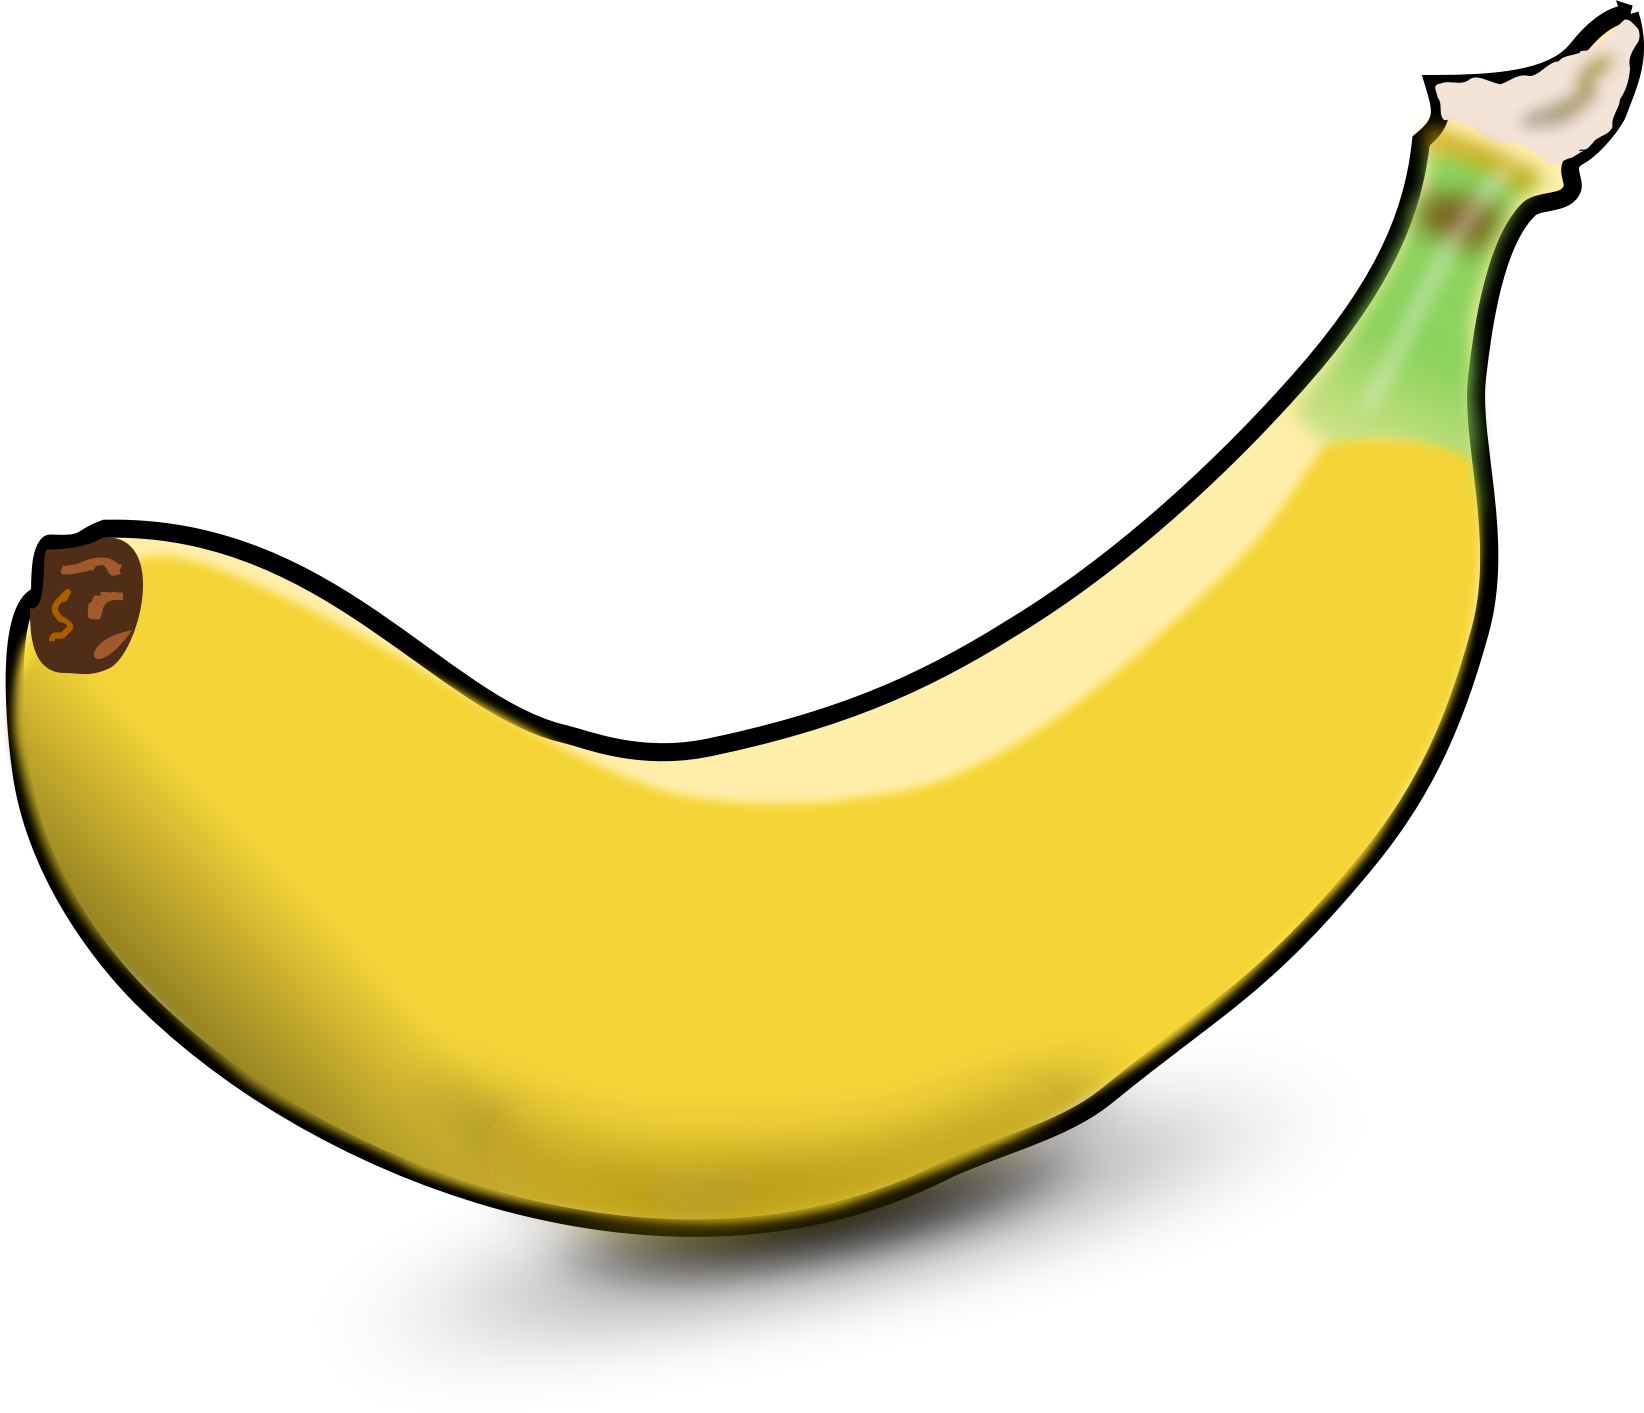 Foods clipart banana, Foods banana Transparent FREE for